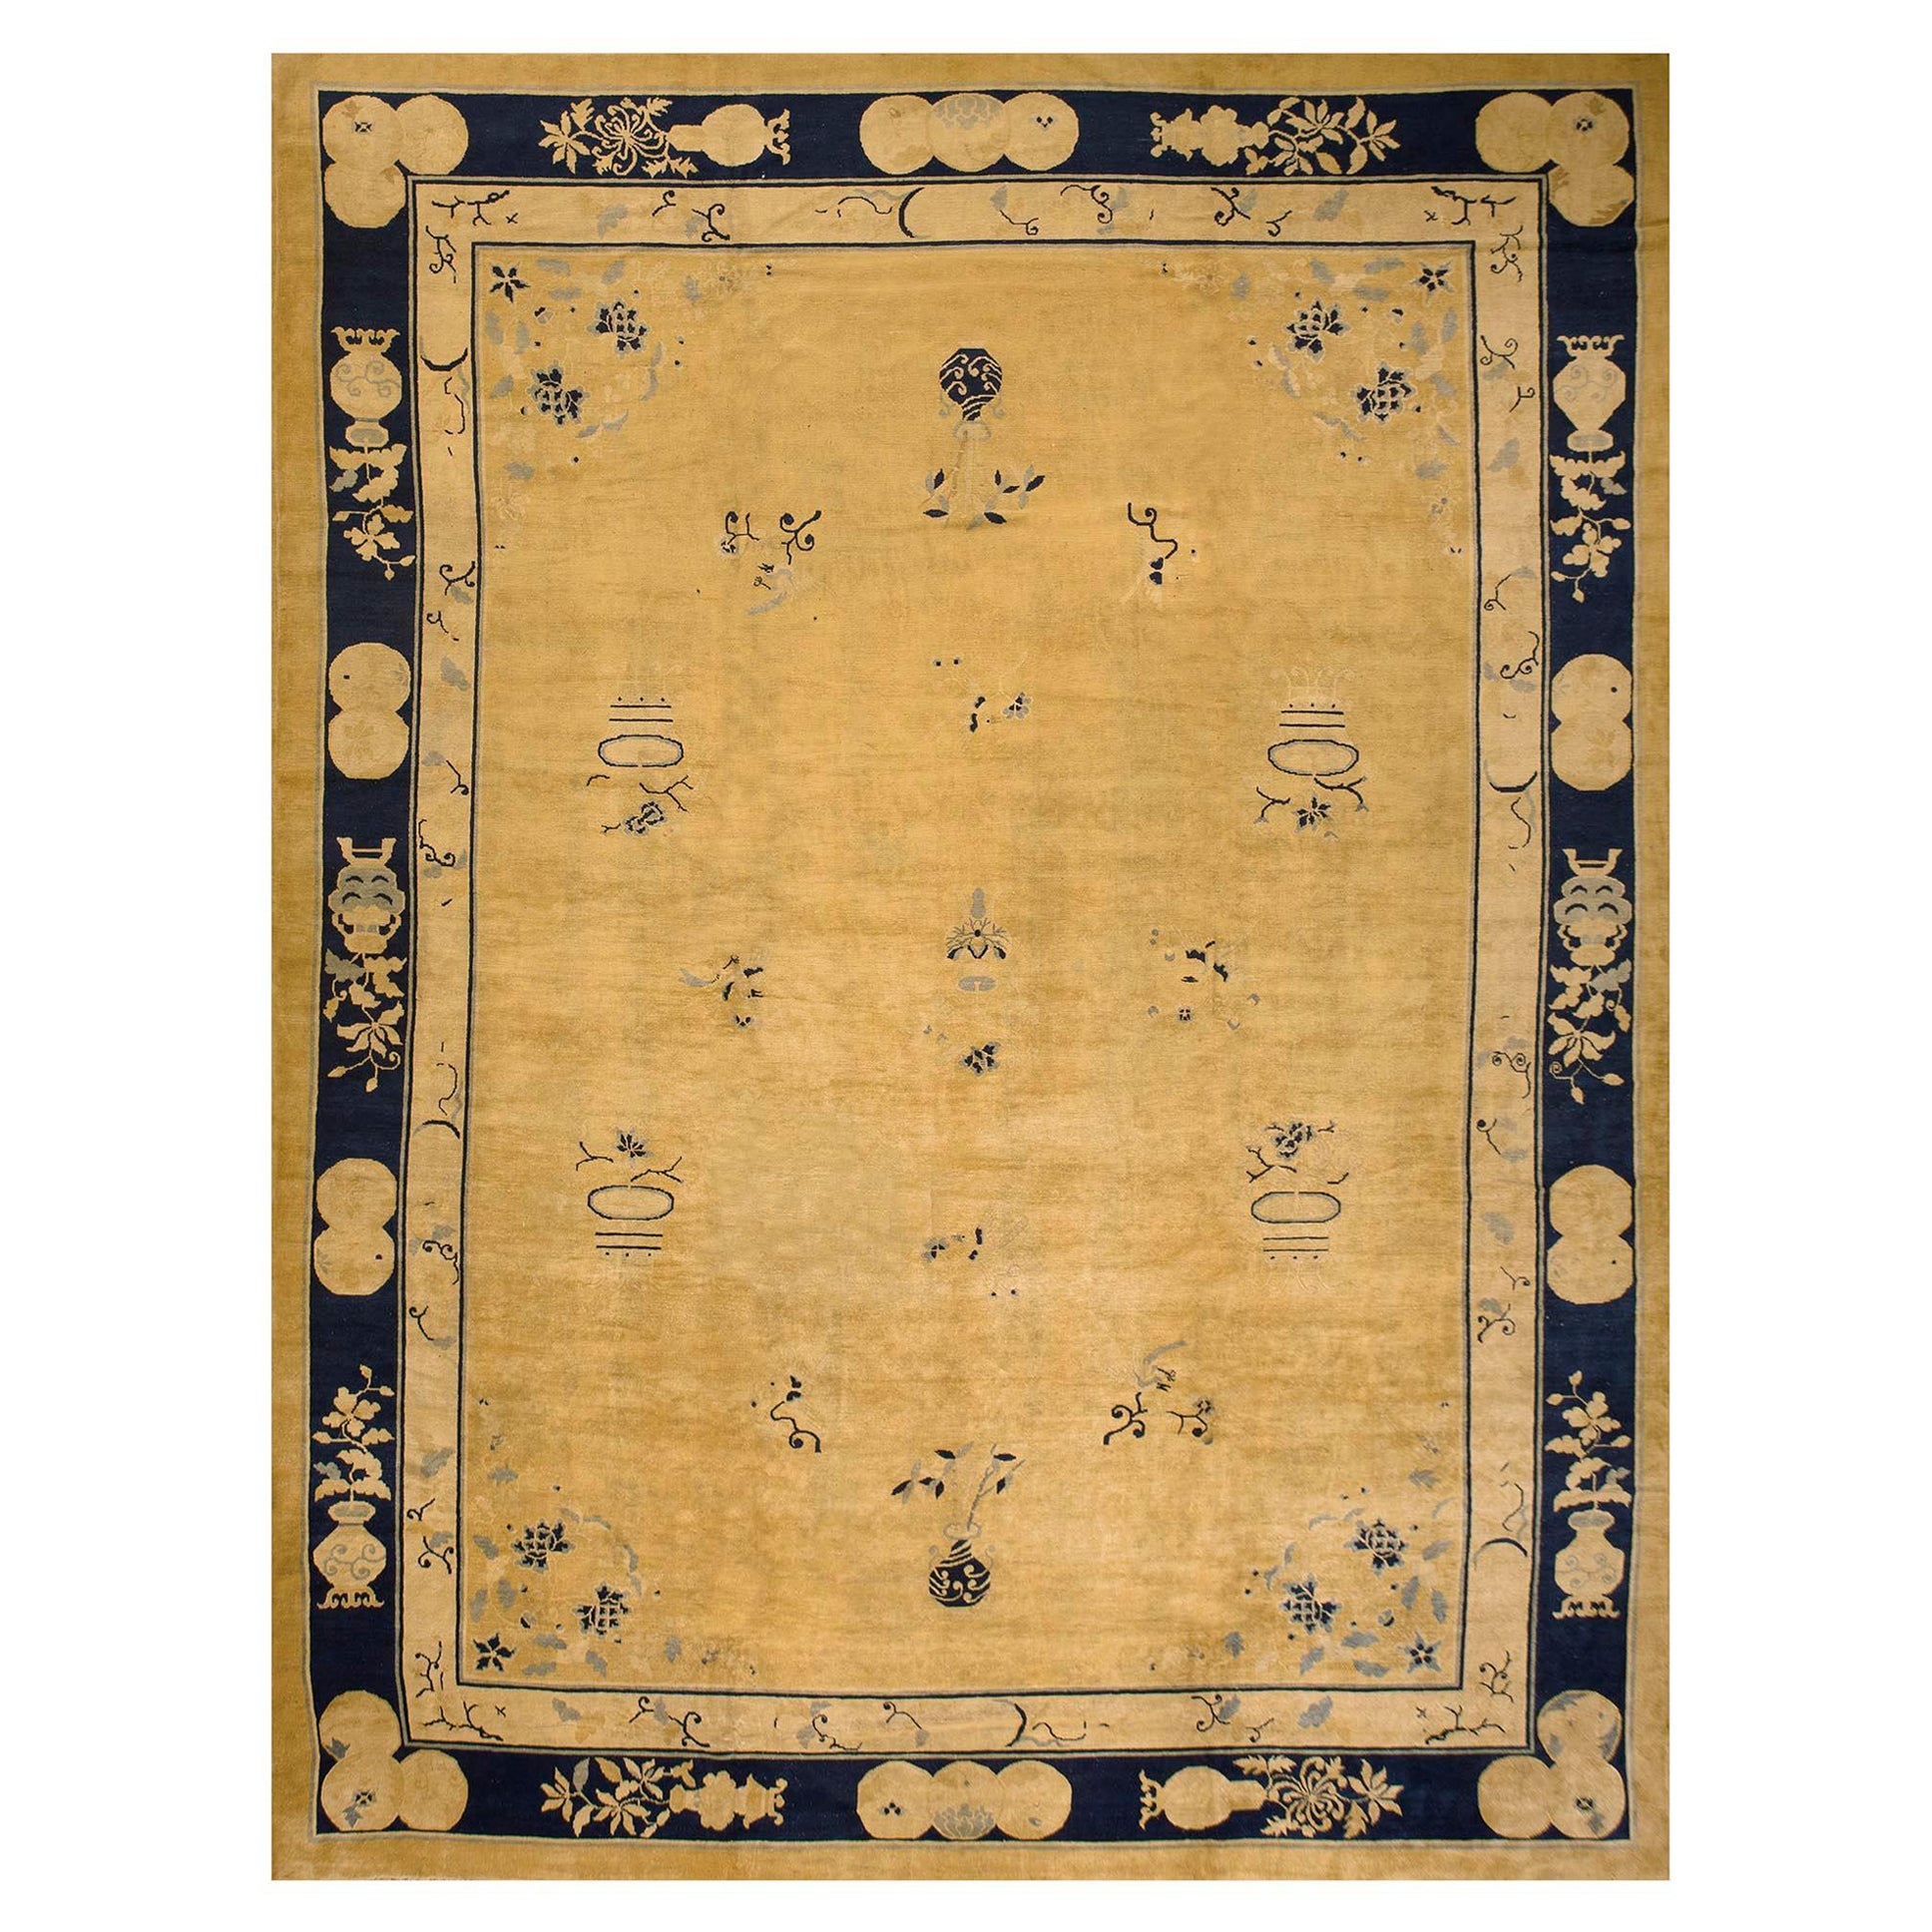 Late 19th Century Chinese Peking Carpet ( 11'8" x 15'5" - 355 x 470)